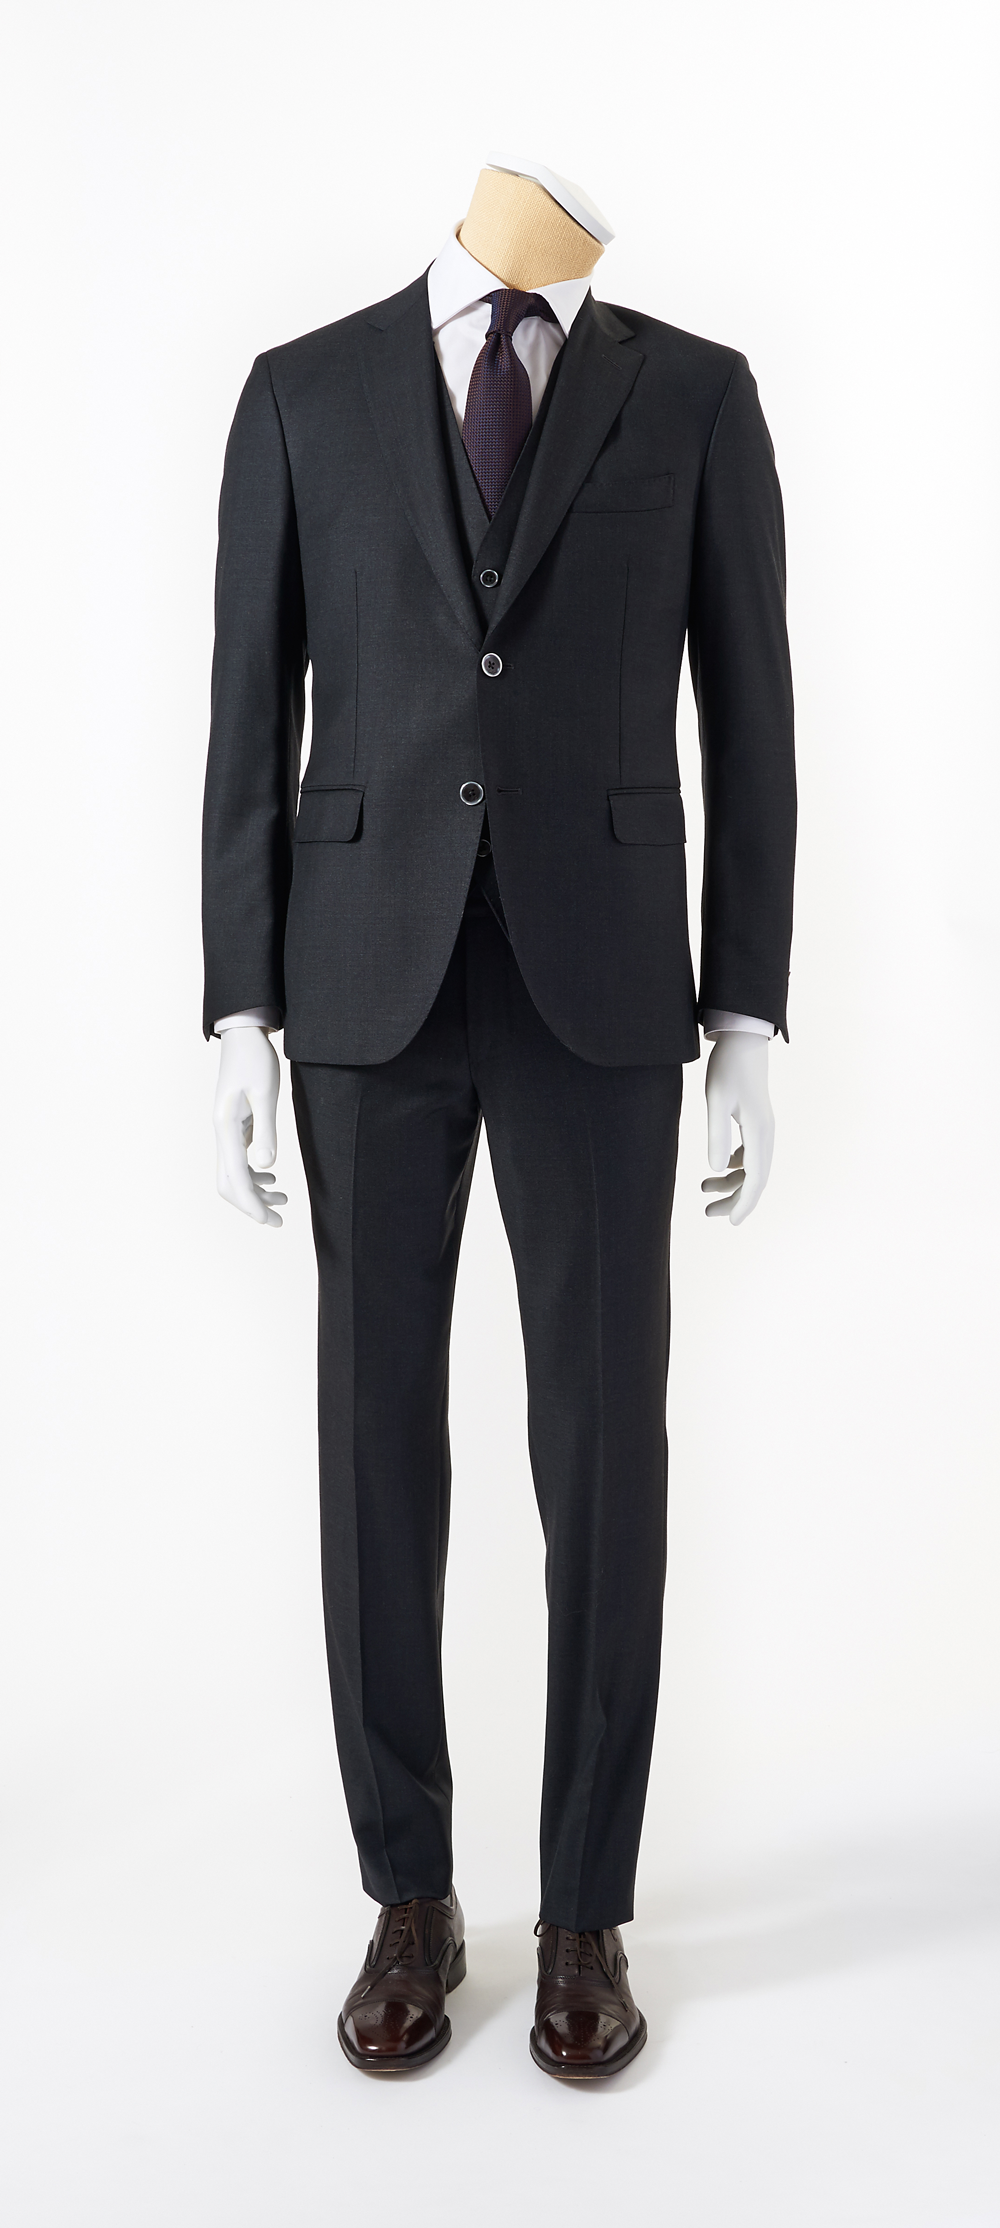 Calvaresi Men's Suit - 3 Piece Charcoal Made In Italy